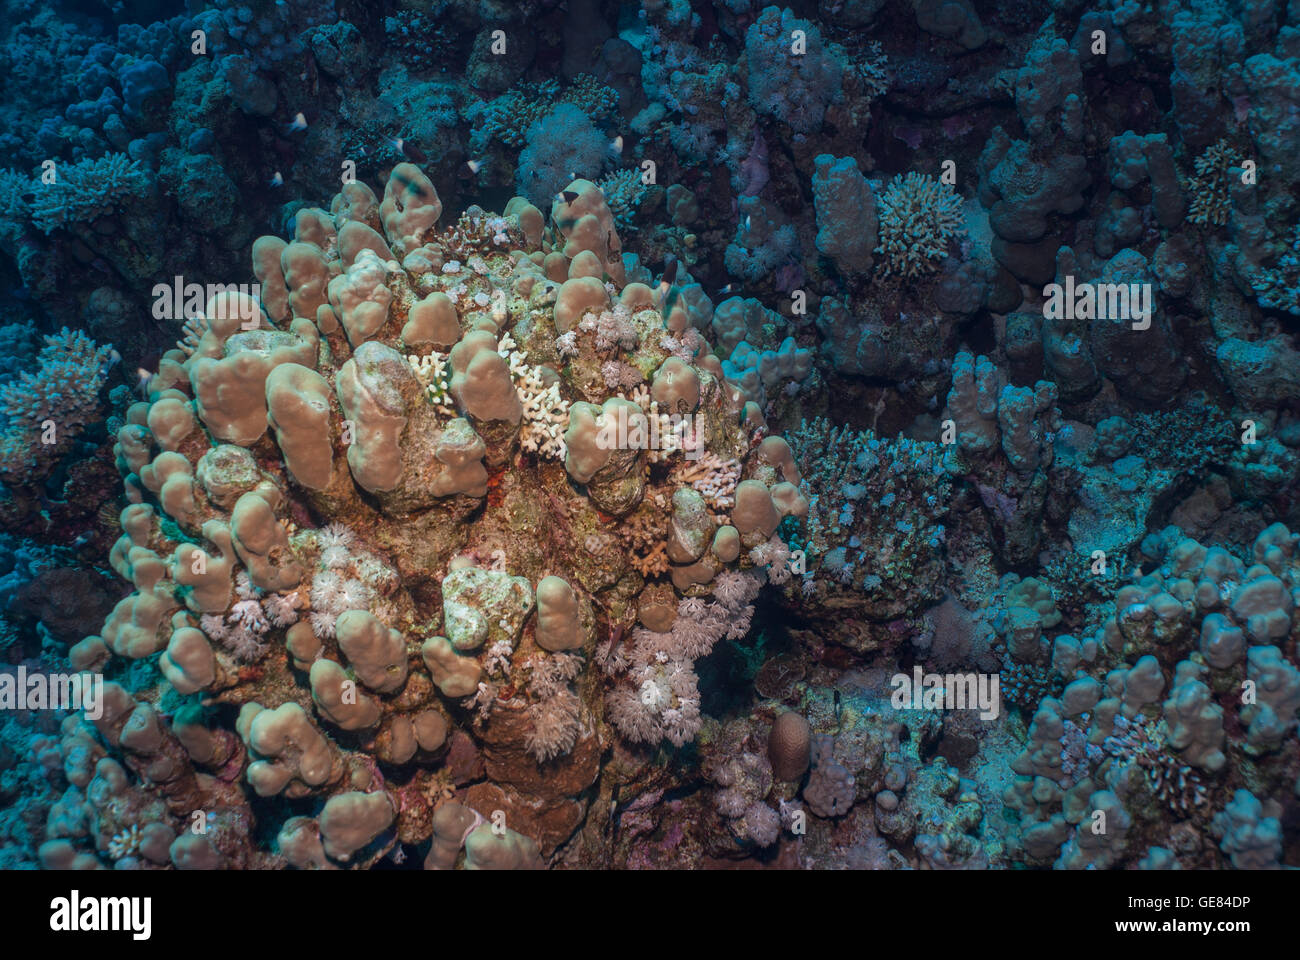 Lobo Porites corallo nodifera, Poritidae, Mar Rosso di Sharm el-Sheikh, Egitto Foto Stock